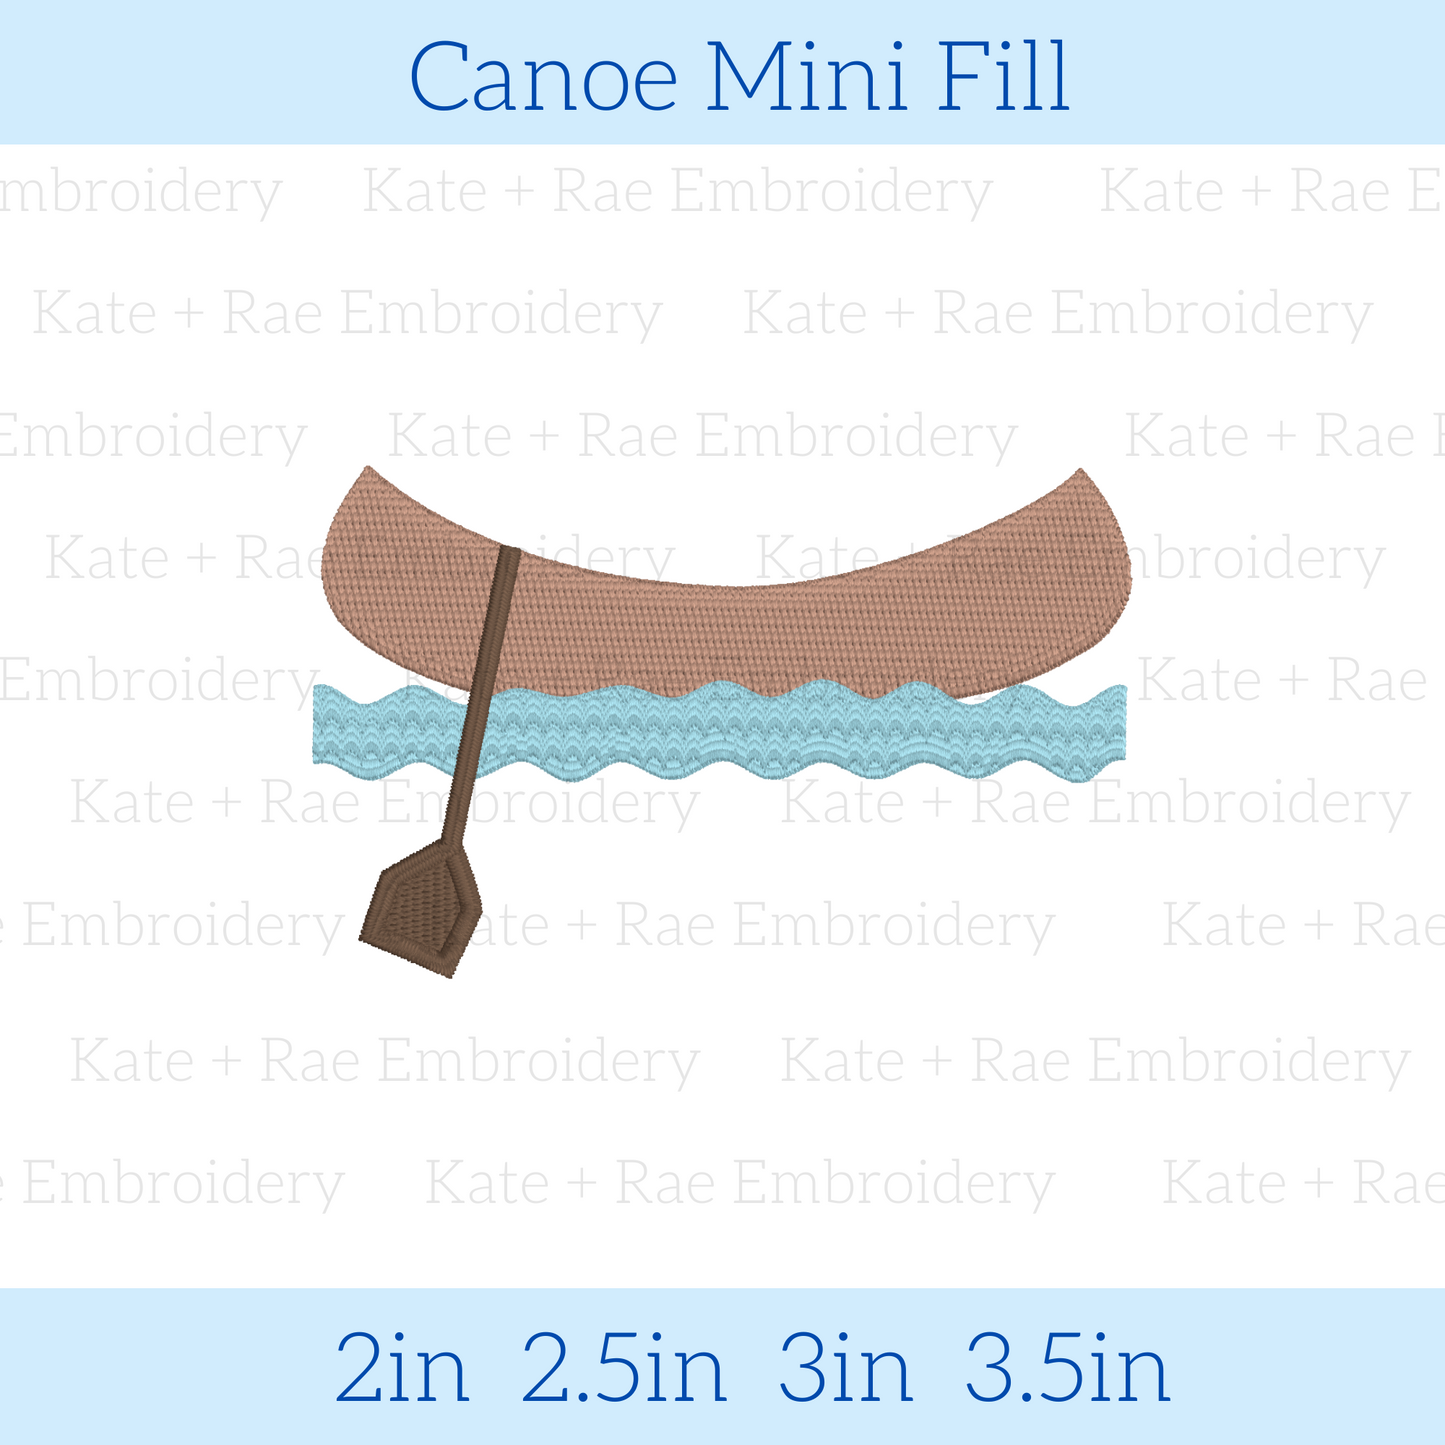 Canoe Mini Fill Design